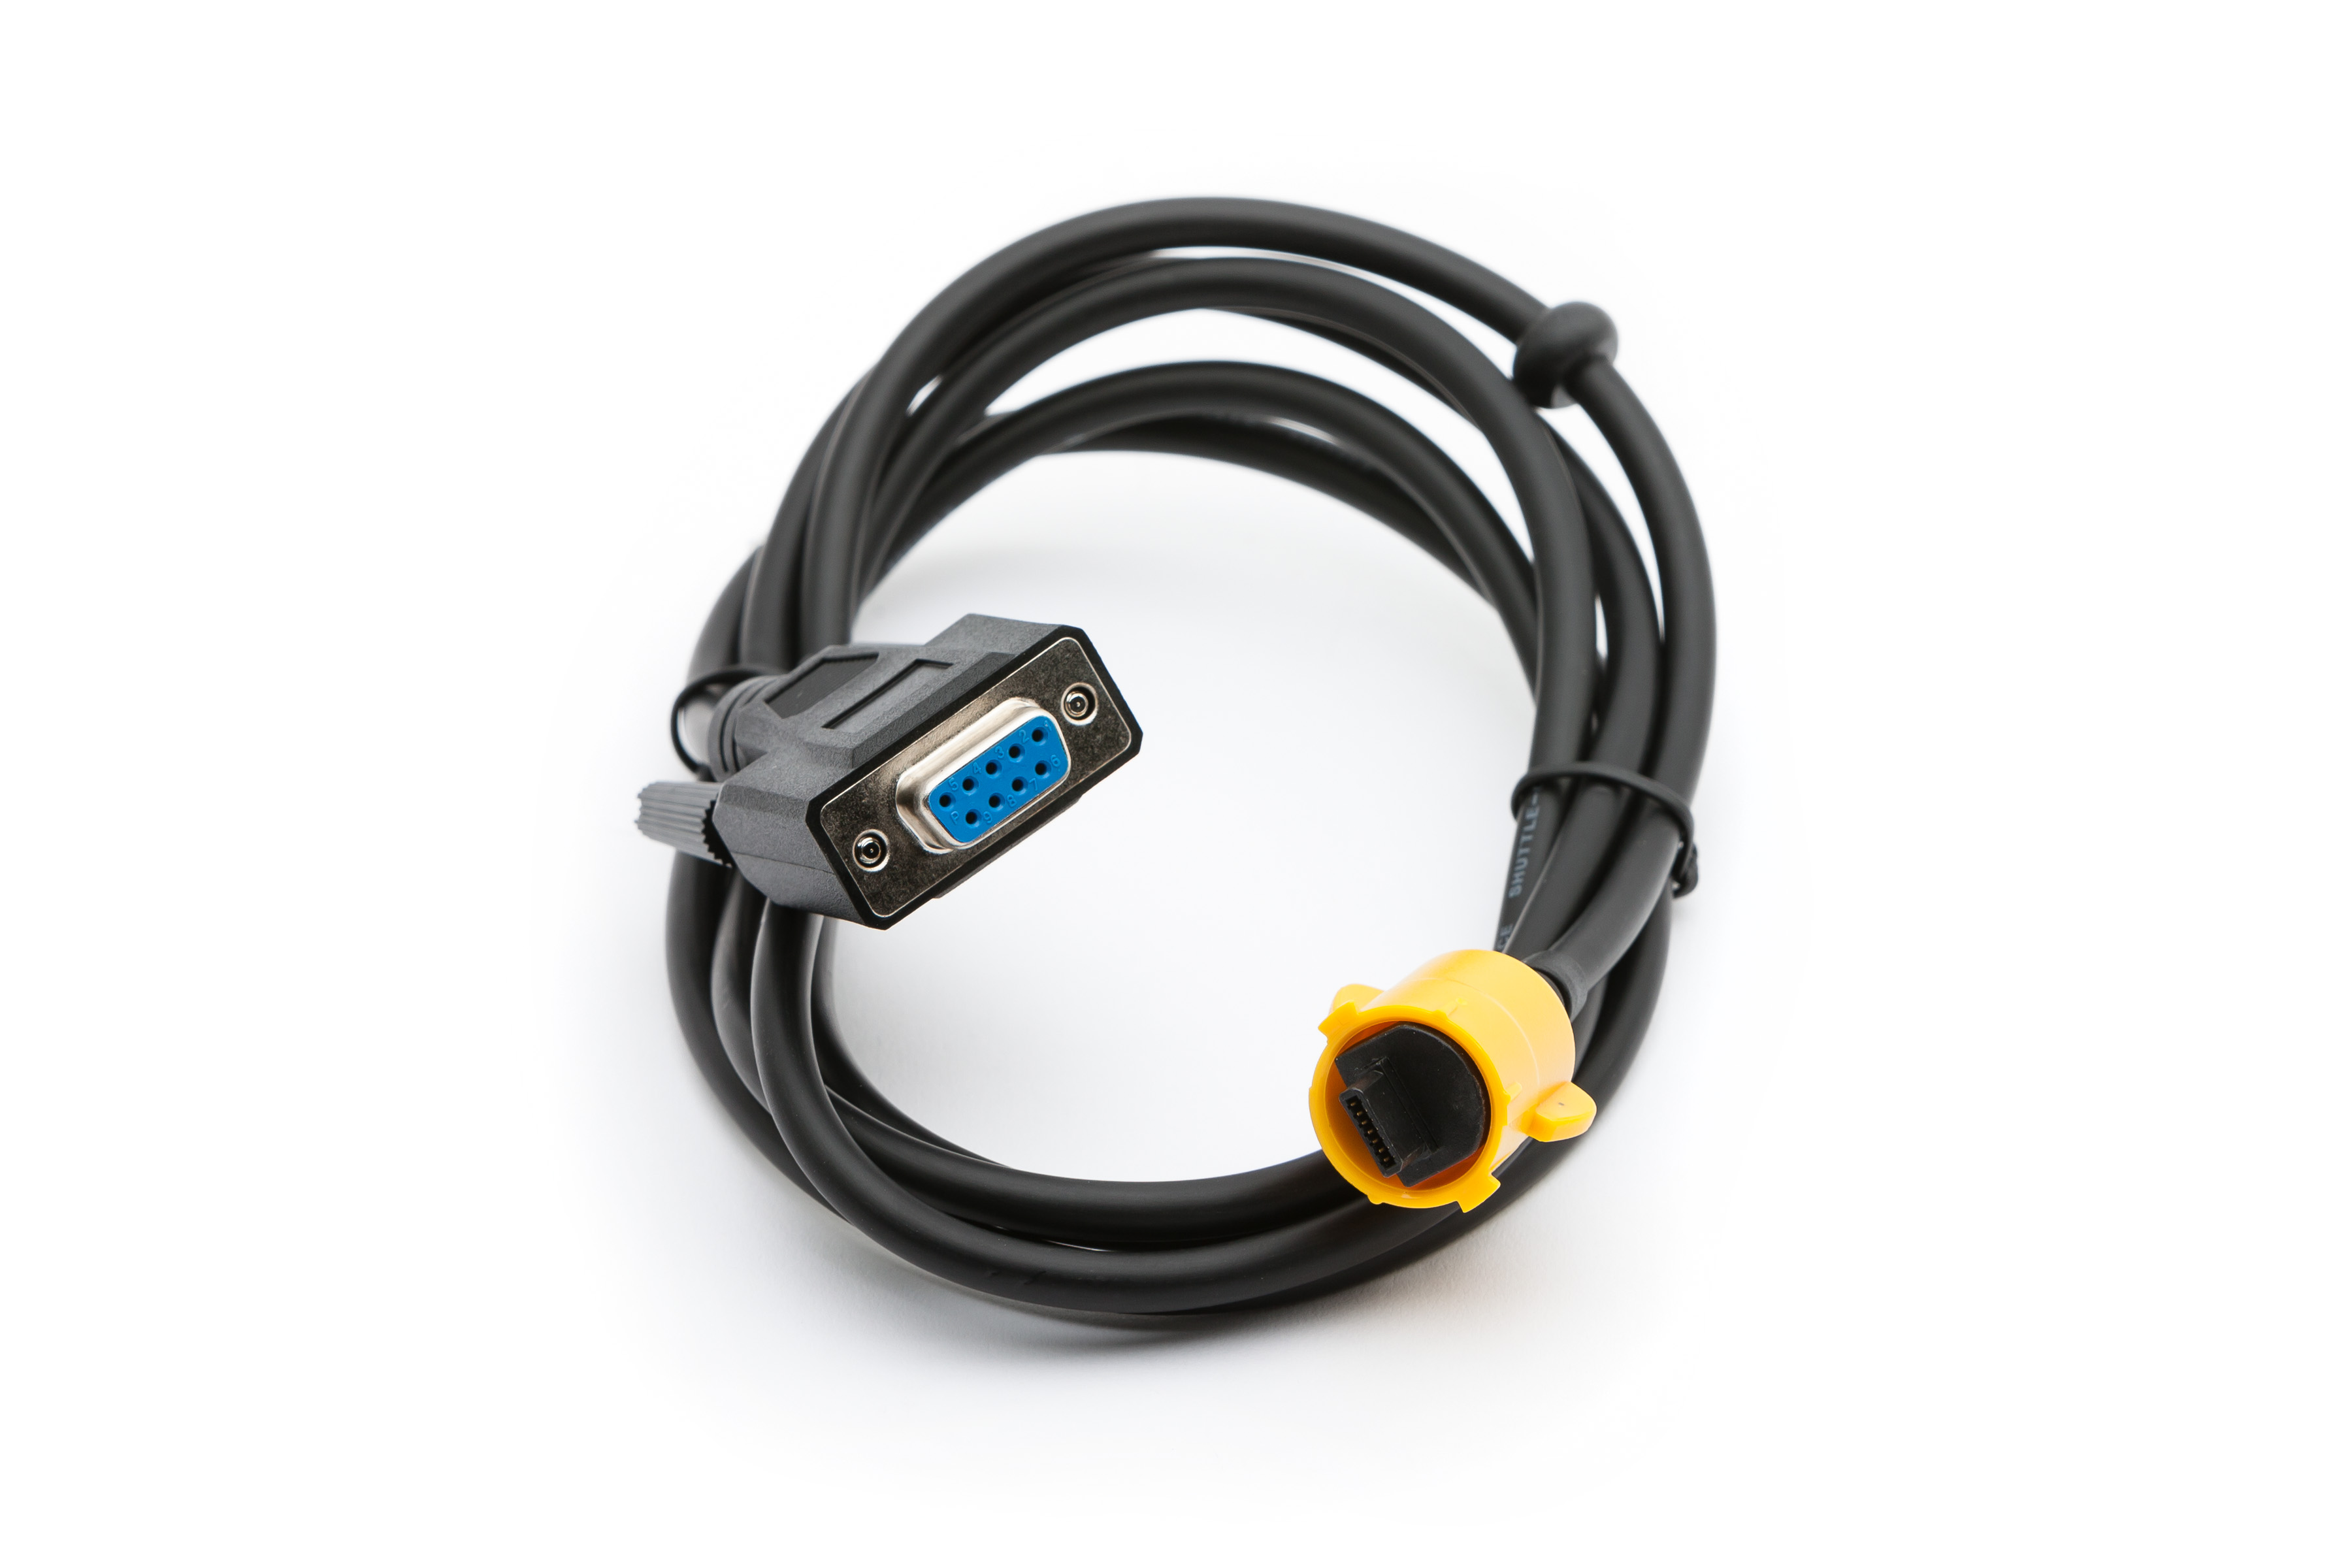 USB PC Cord for Zebra Mobile Printers H-2553 - Uline